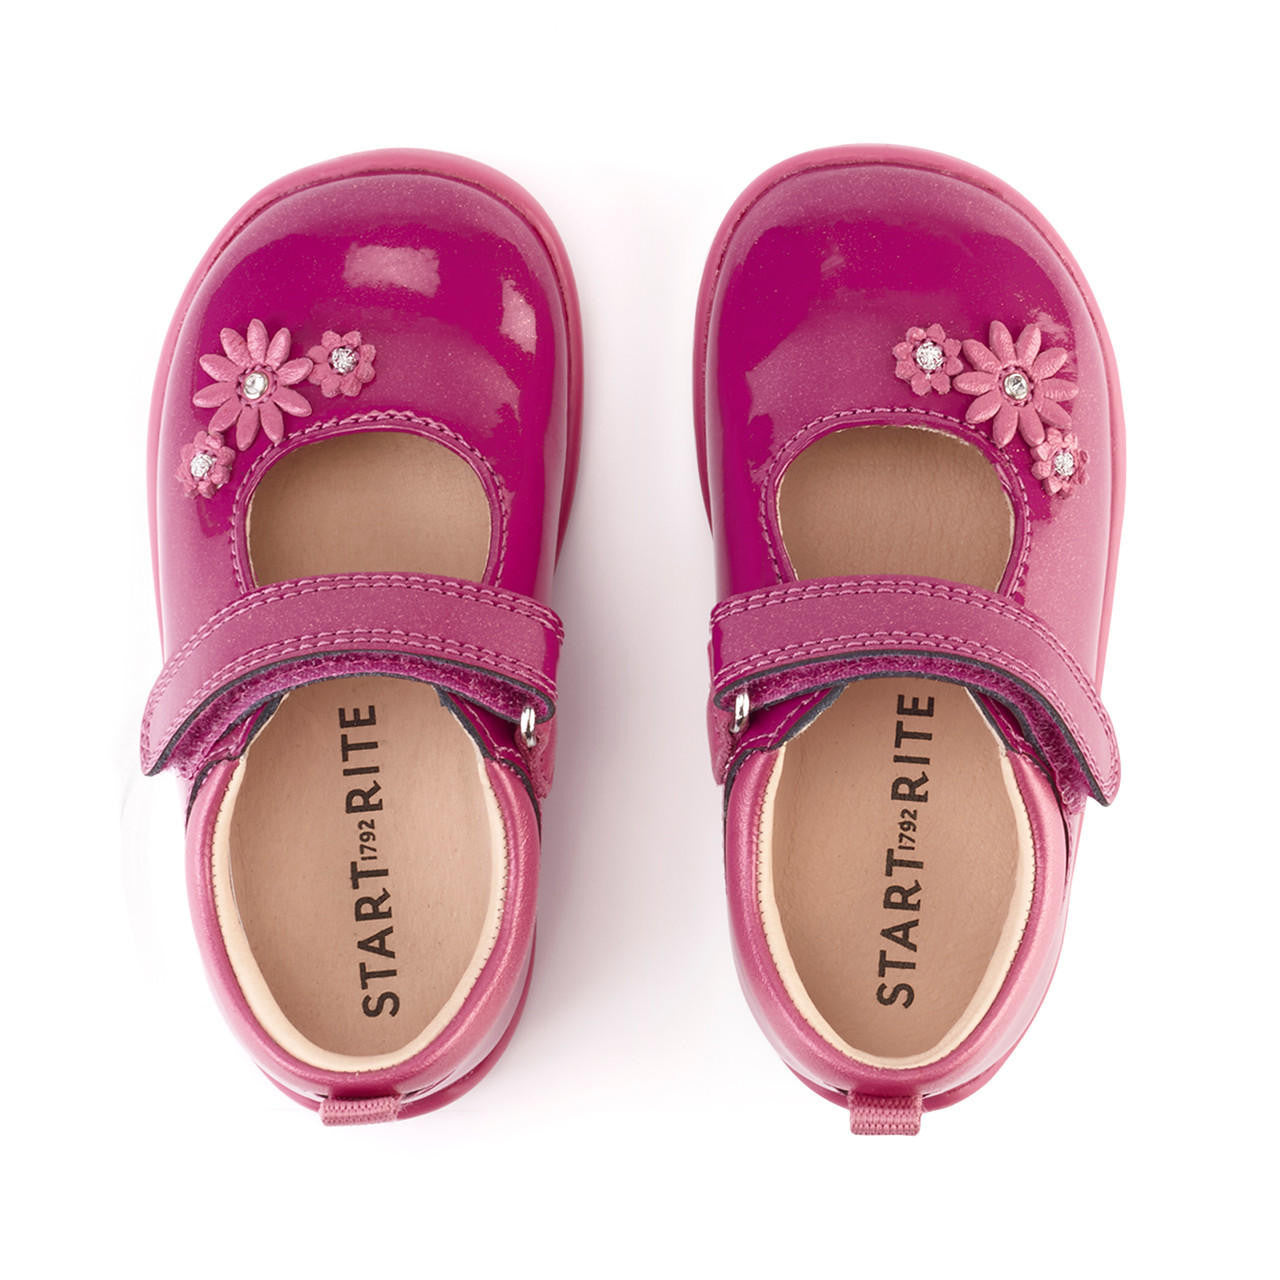 Start-Rite | Fairy Tale | Girls Velcro Shoe | Berry Glitter Patent